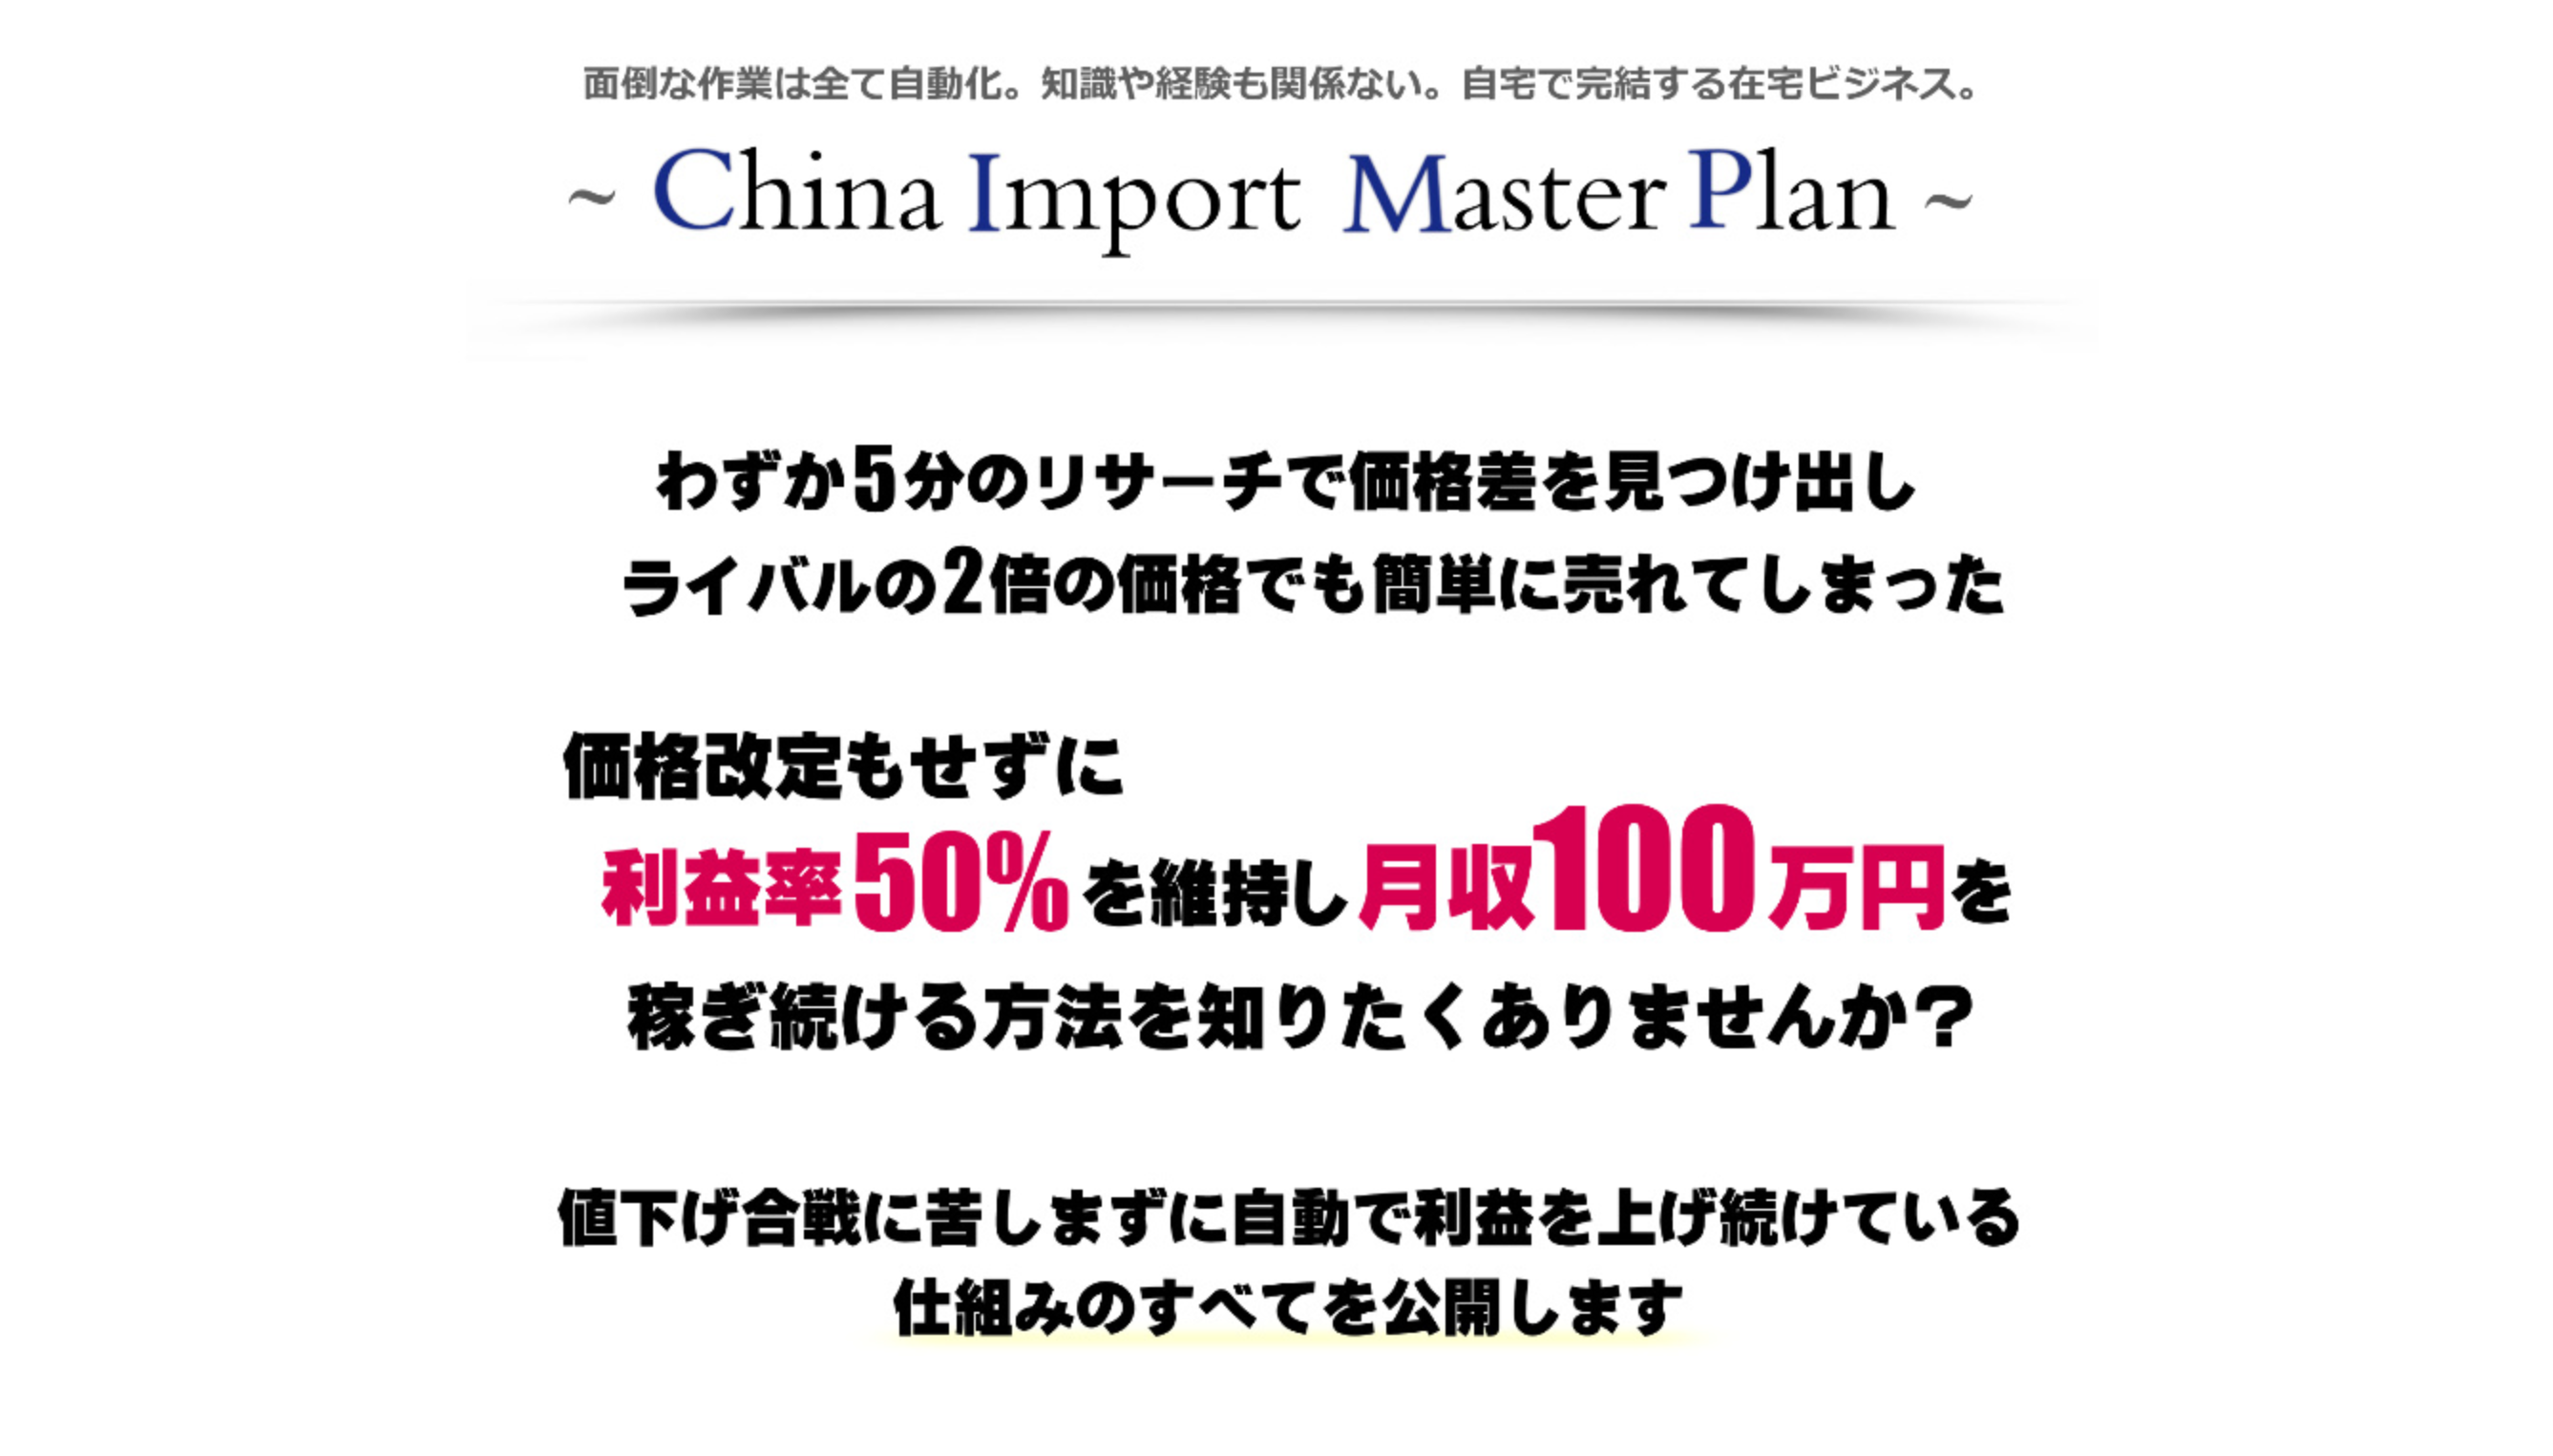 China Import Master Plan